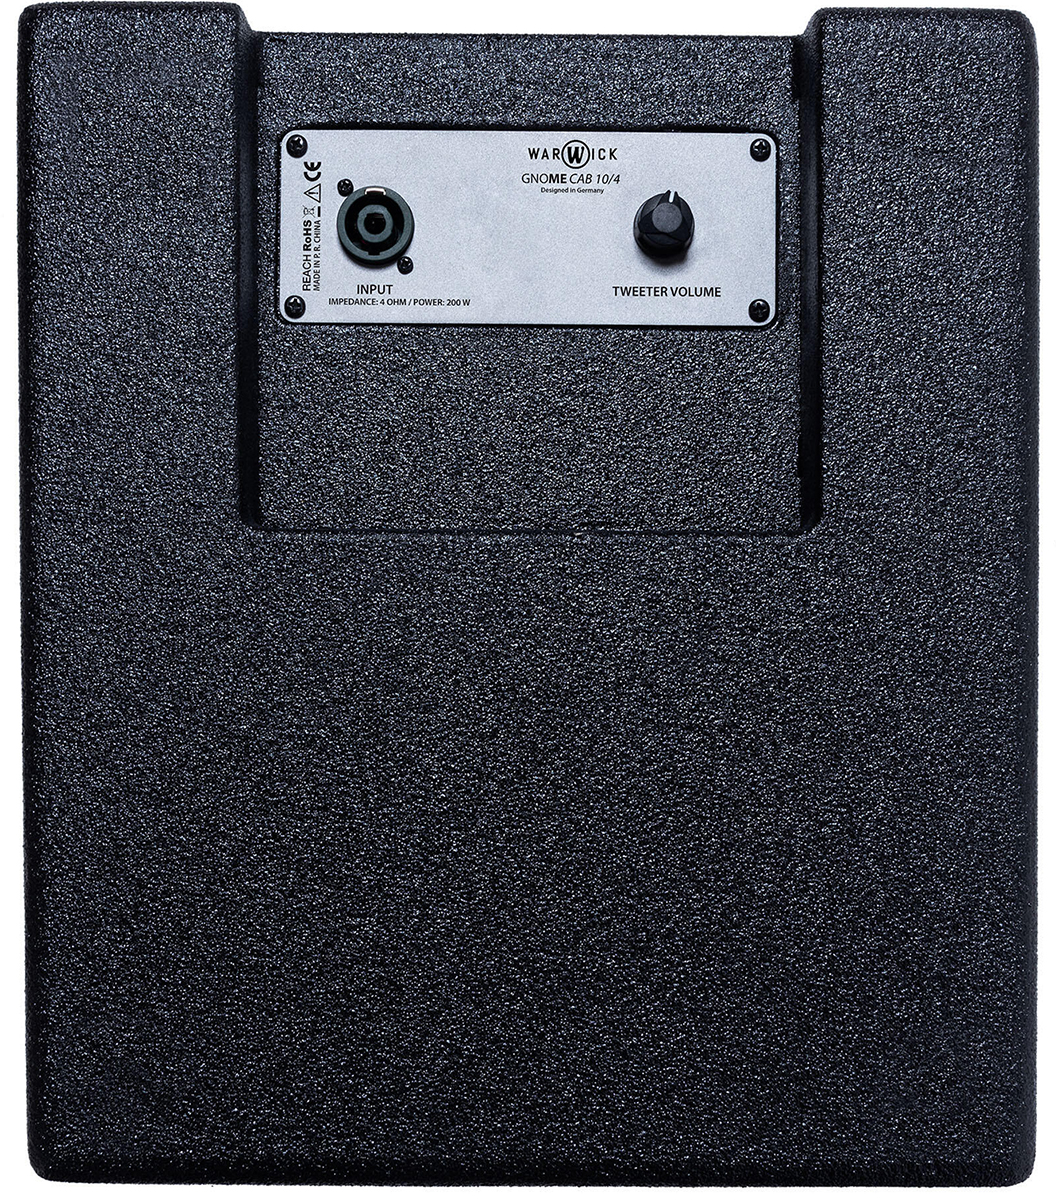 Warwick Gnome Pro Cab 10/4 Bass Cab 1x10 200w 4-ohms - Bass amp cabinet - Variation 2